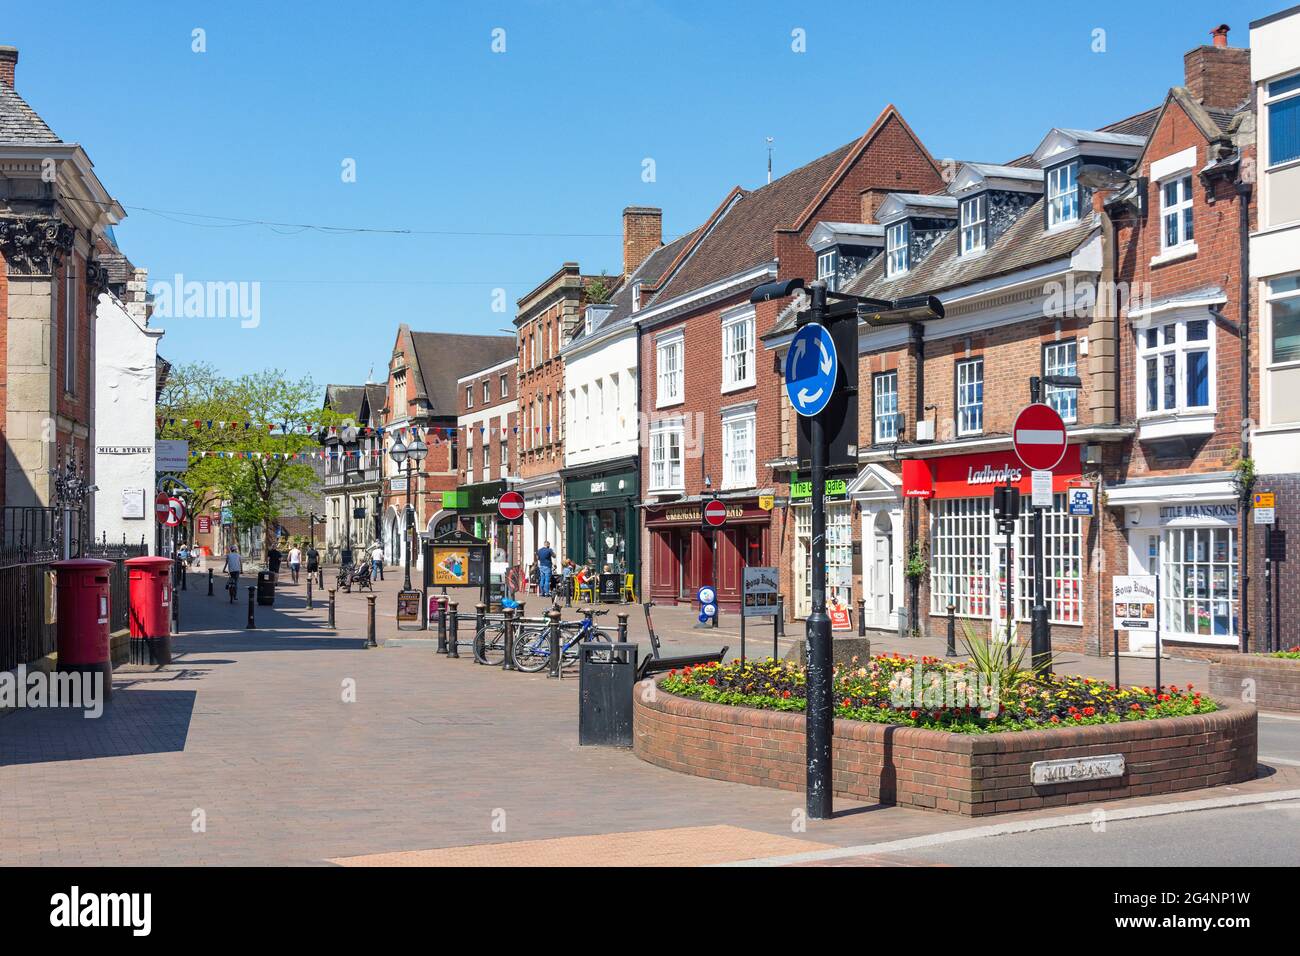 Pedestrianised Greengate Street, Stafford, Staffordshire, England ...